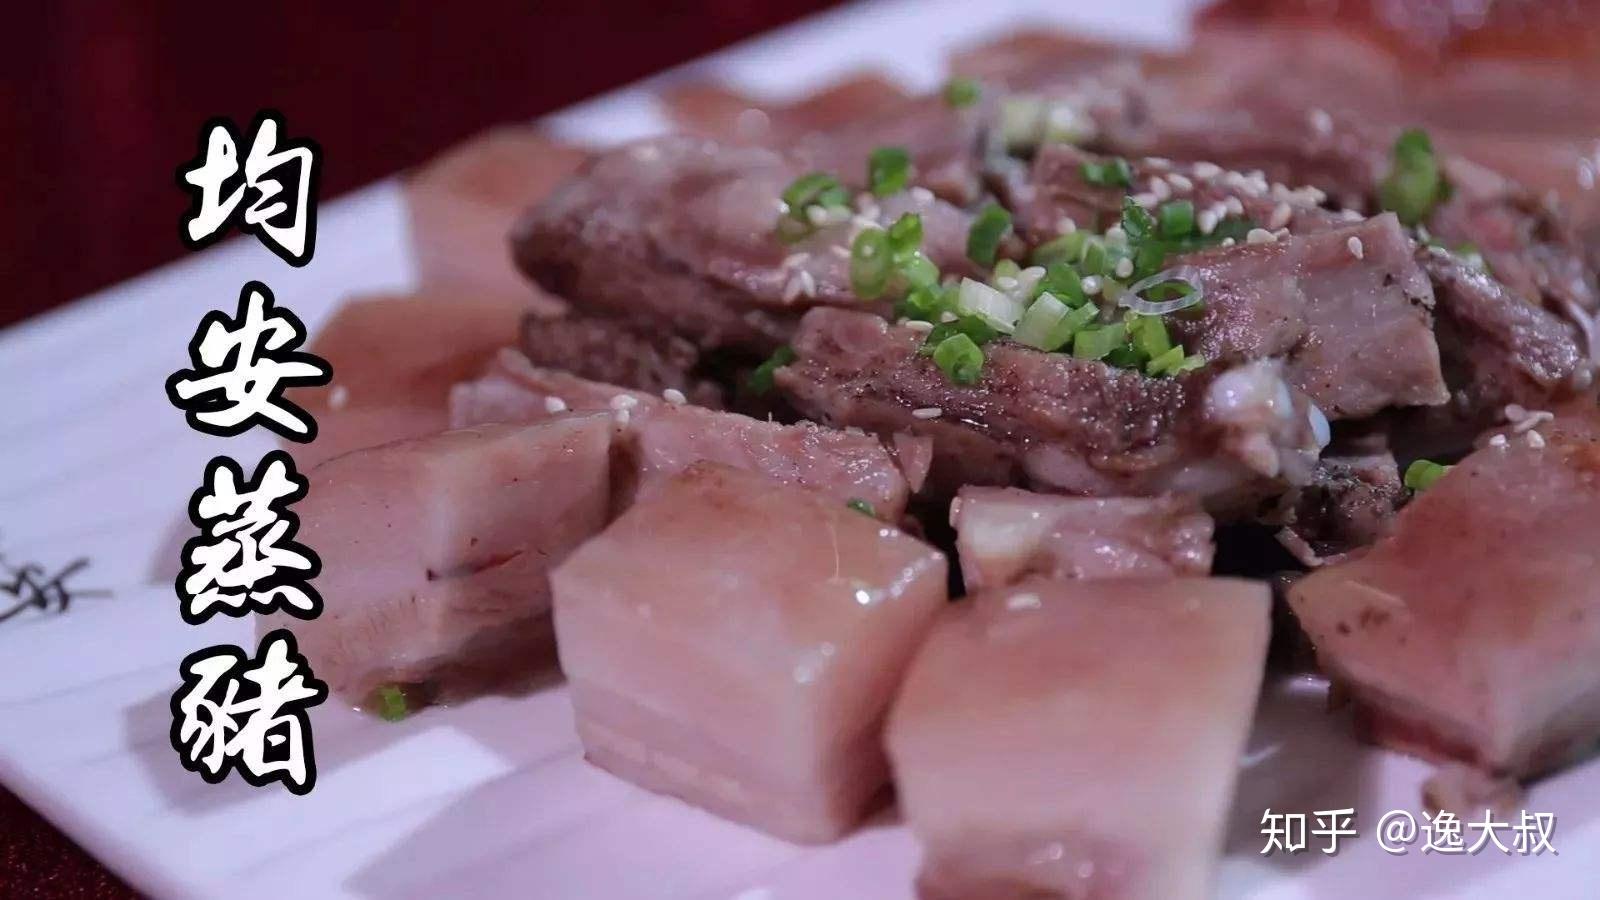 Jenny's Delicacy: 大头菜蒸猪肉